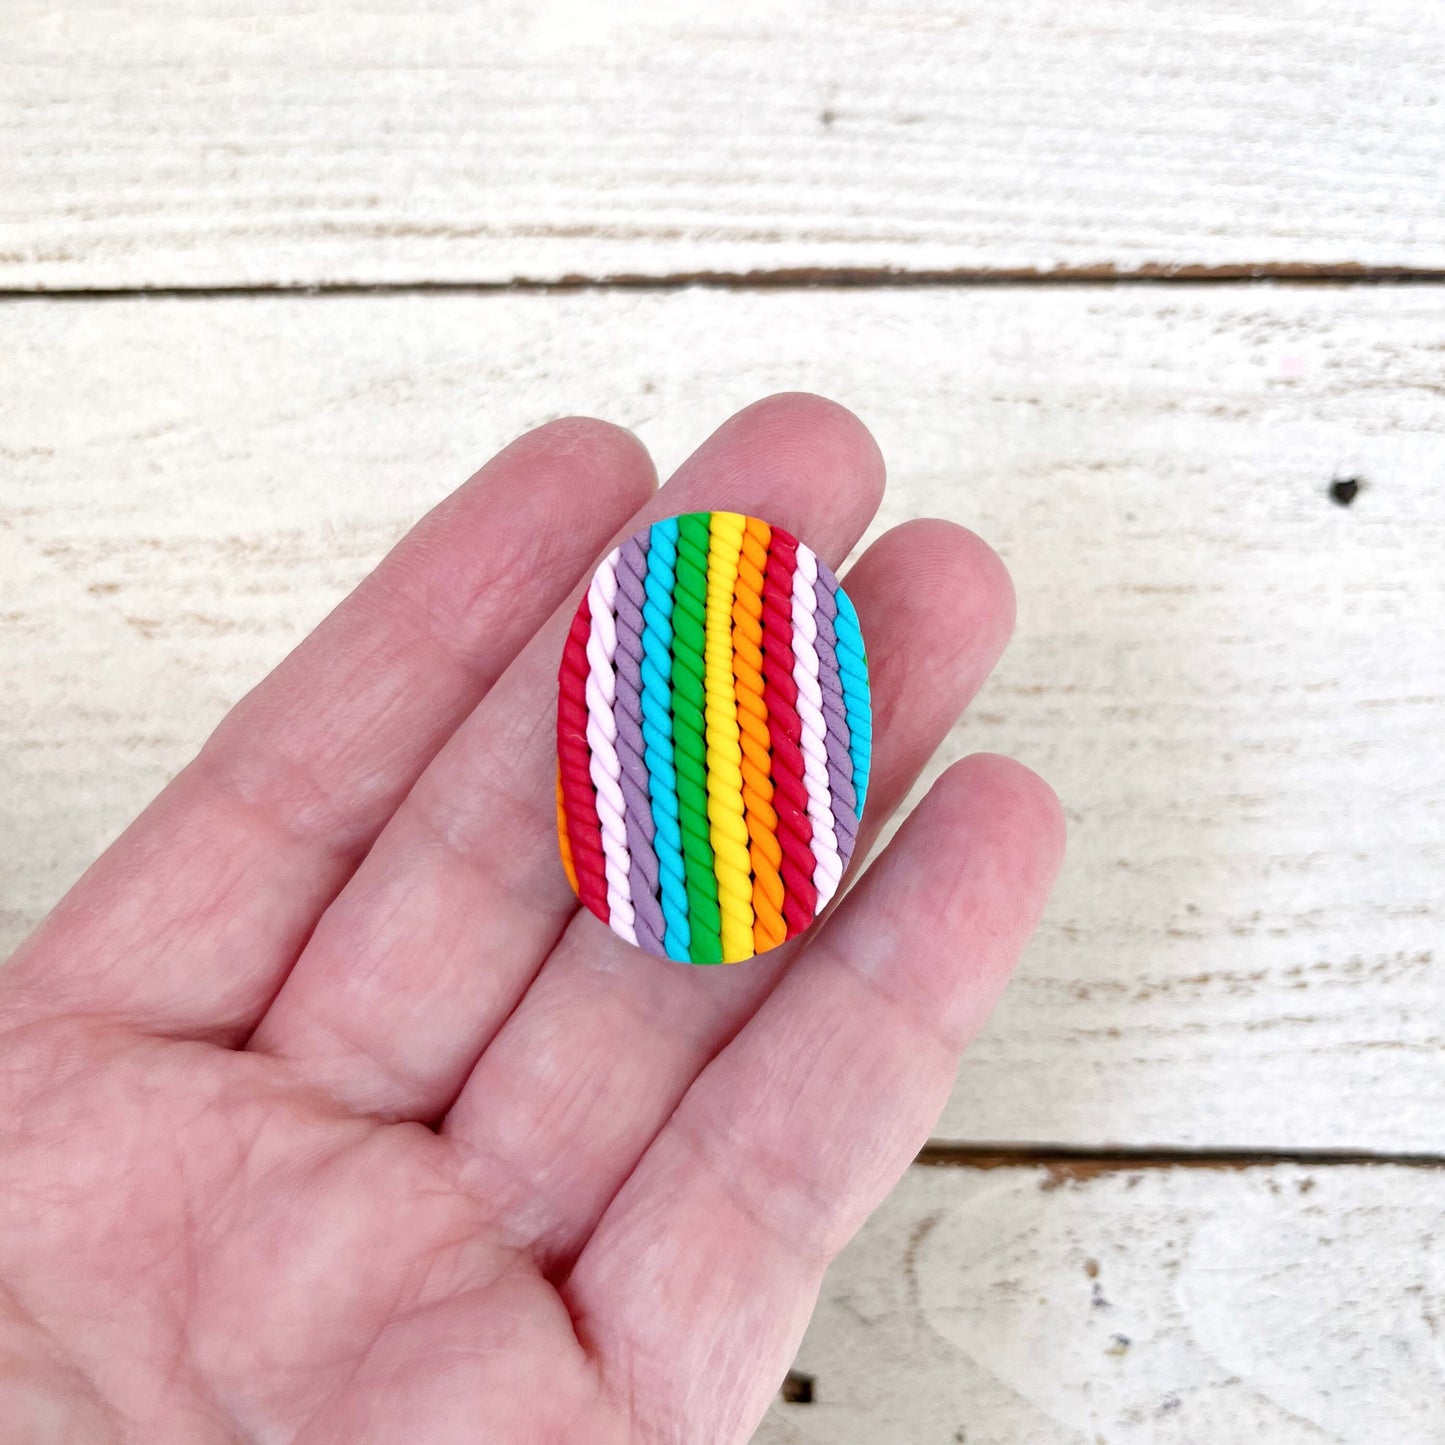 Oval rainbow yarn magnetic sewing aid, cross stitch crochet magnets, rainbow needle minder